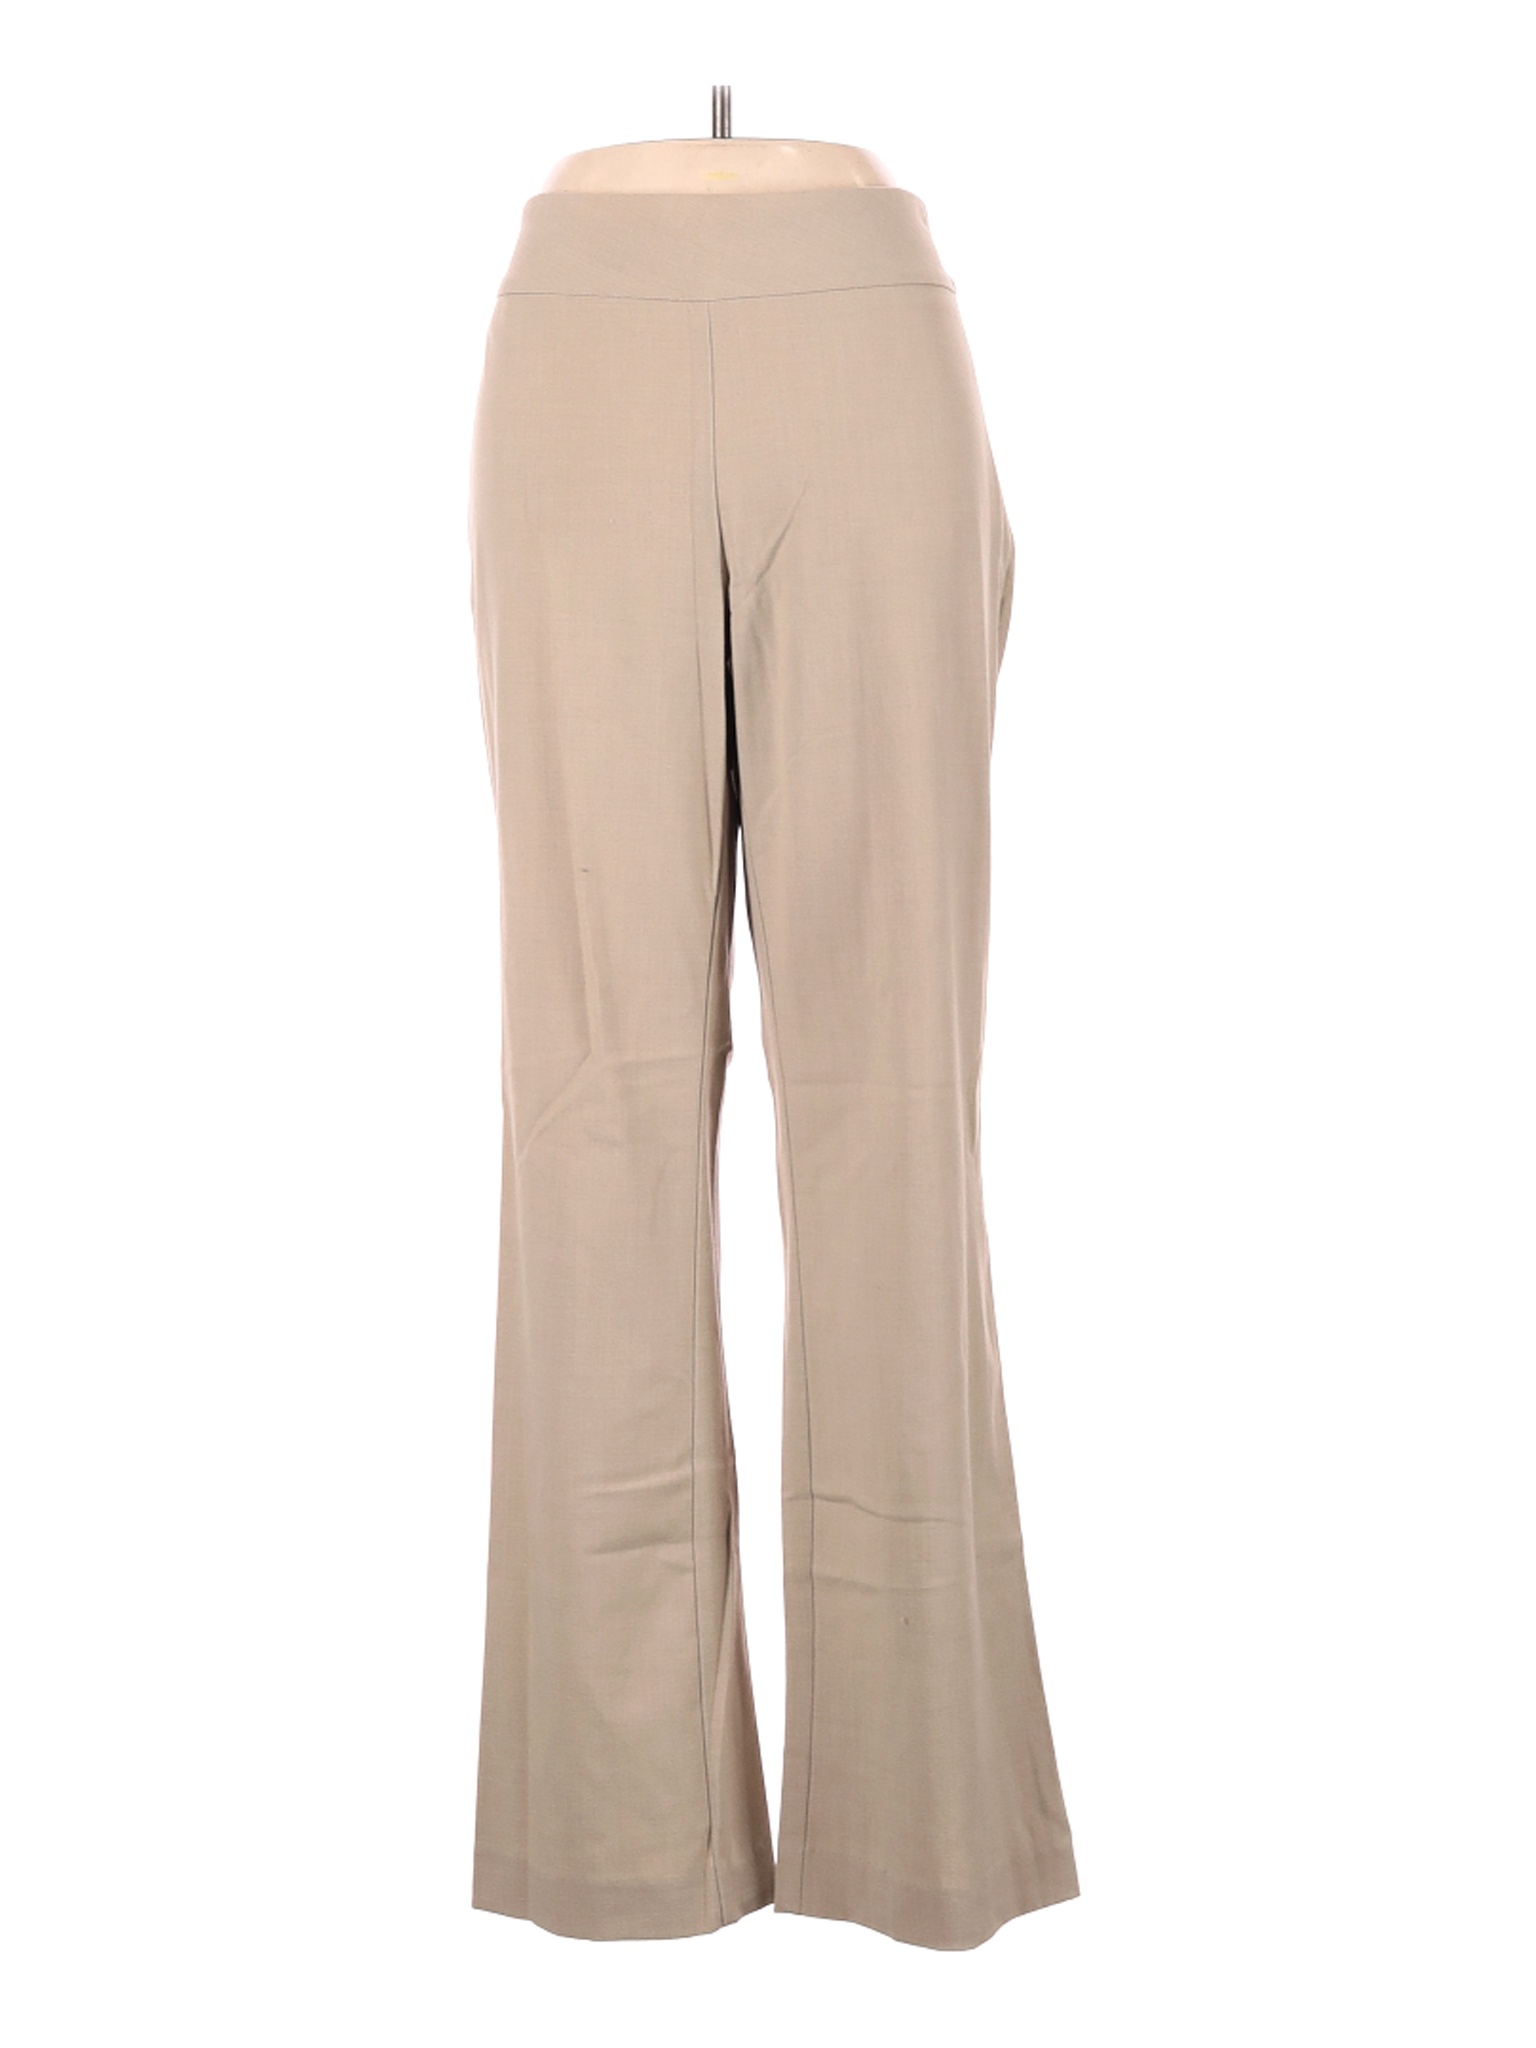 Roz & Ali Women Brown Casual Pants 8 | eBay